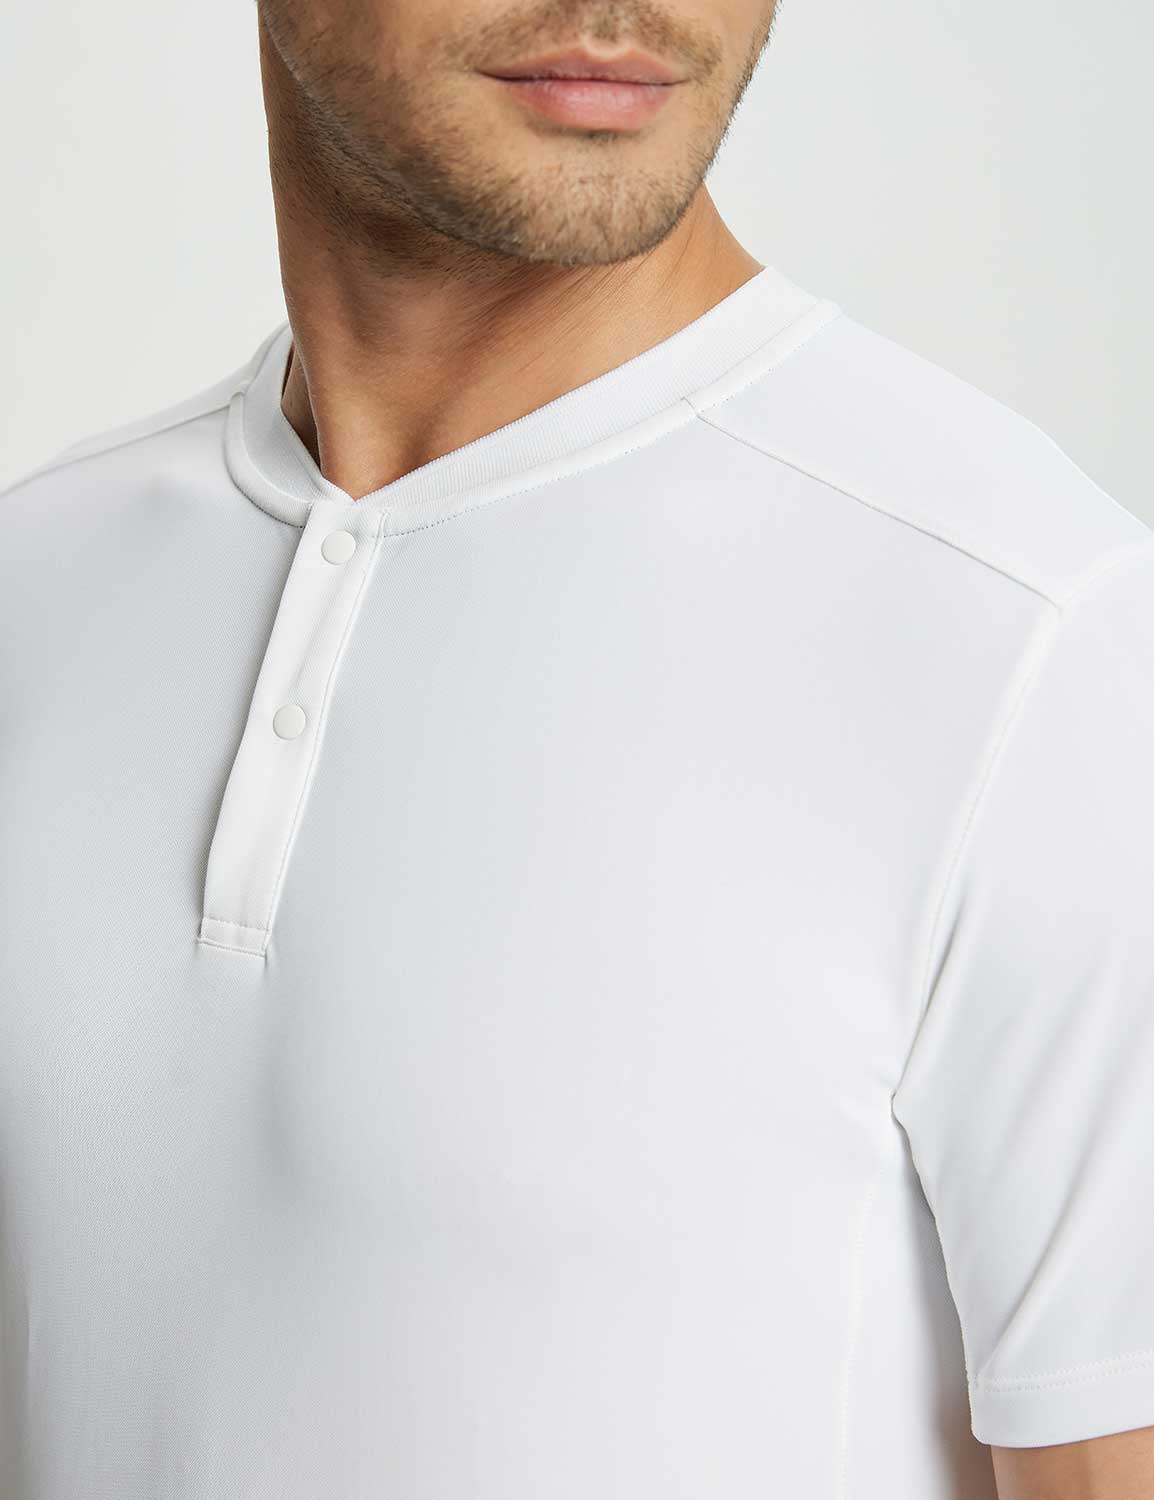 Baleaf Men's Laureate UPF50+ Short-Sleeve Top dfa017 Lucent White Details